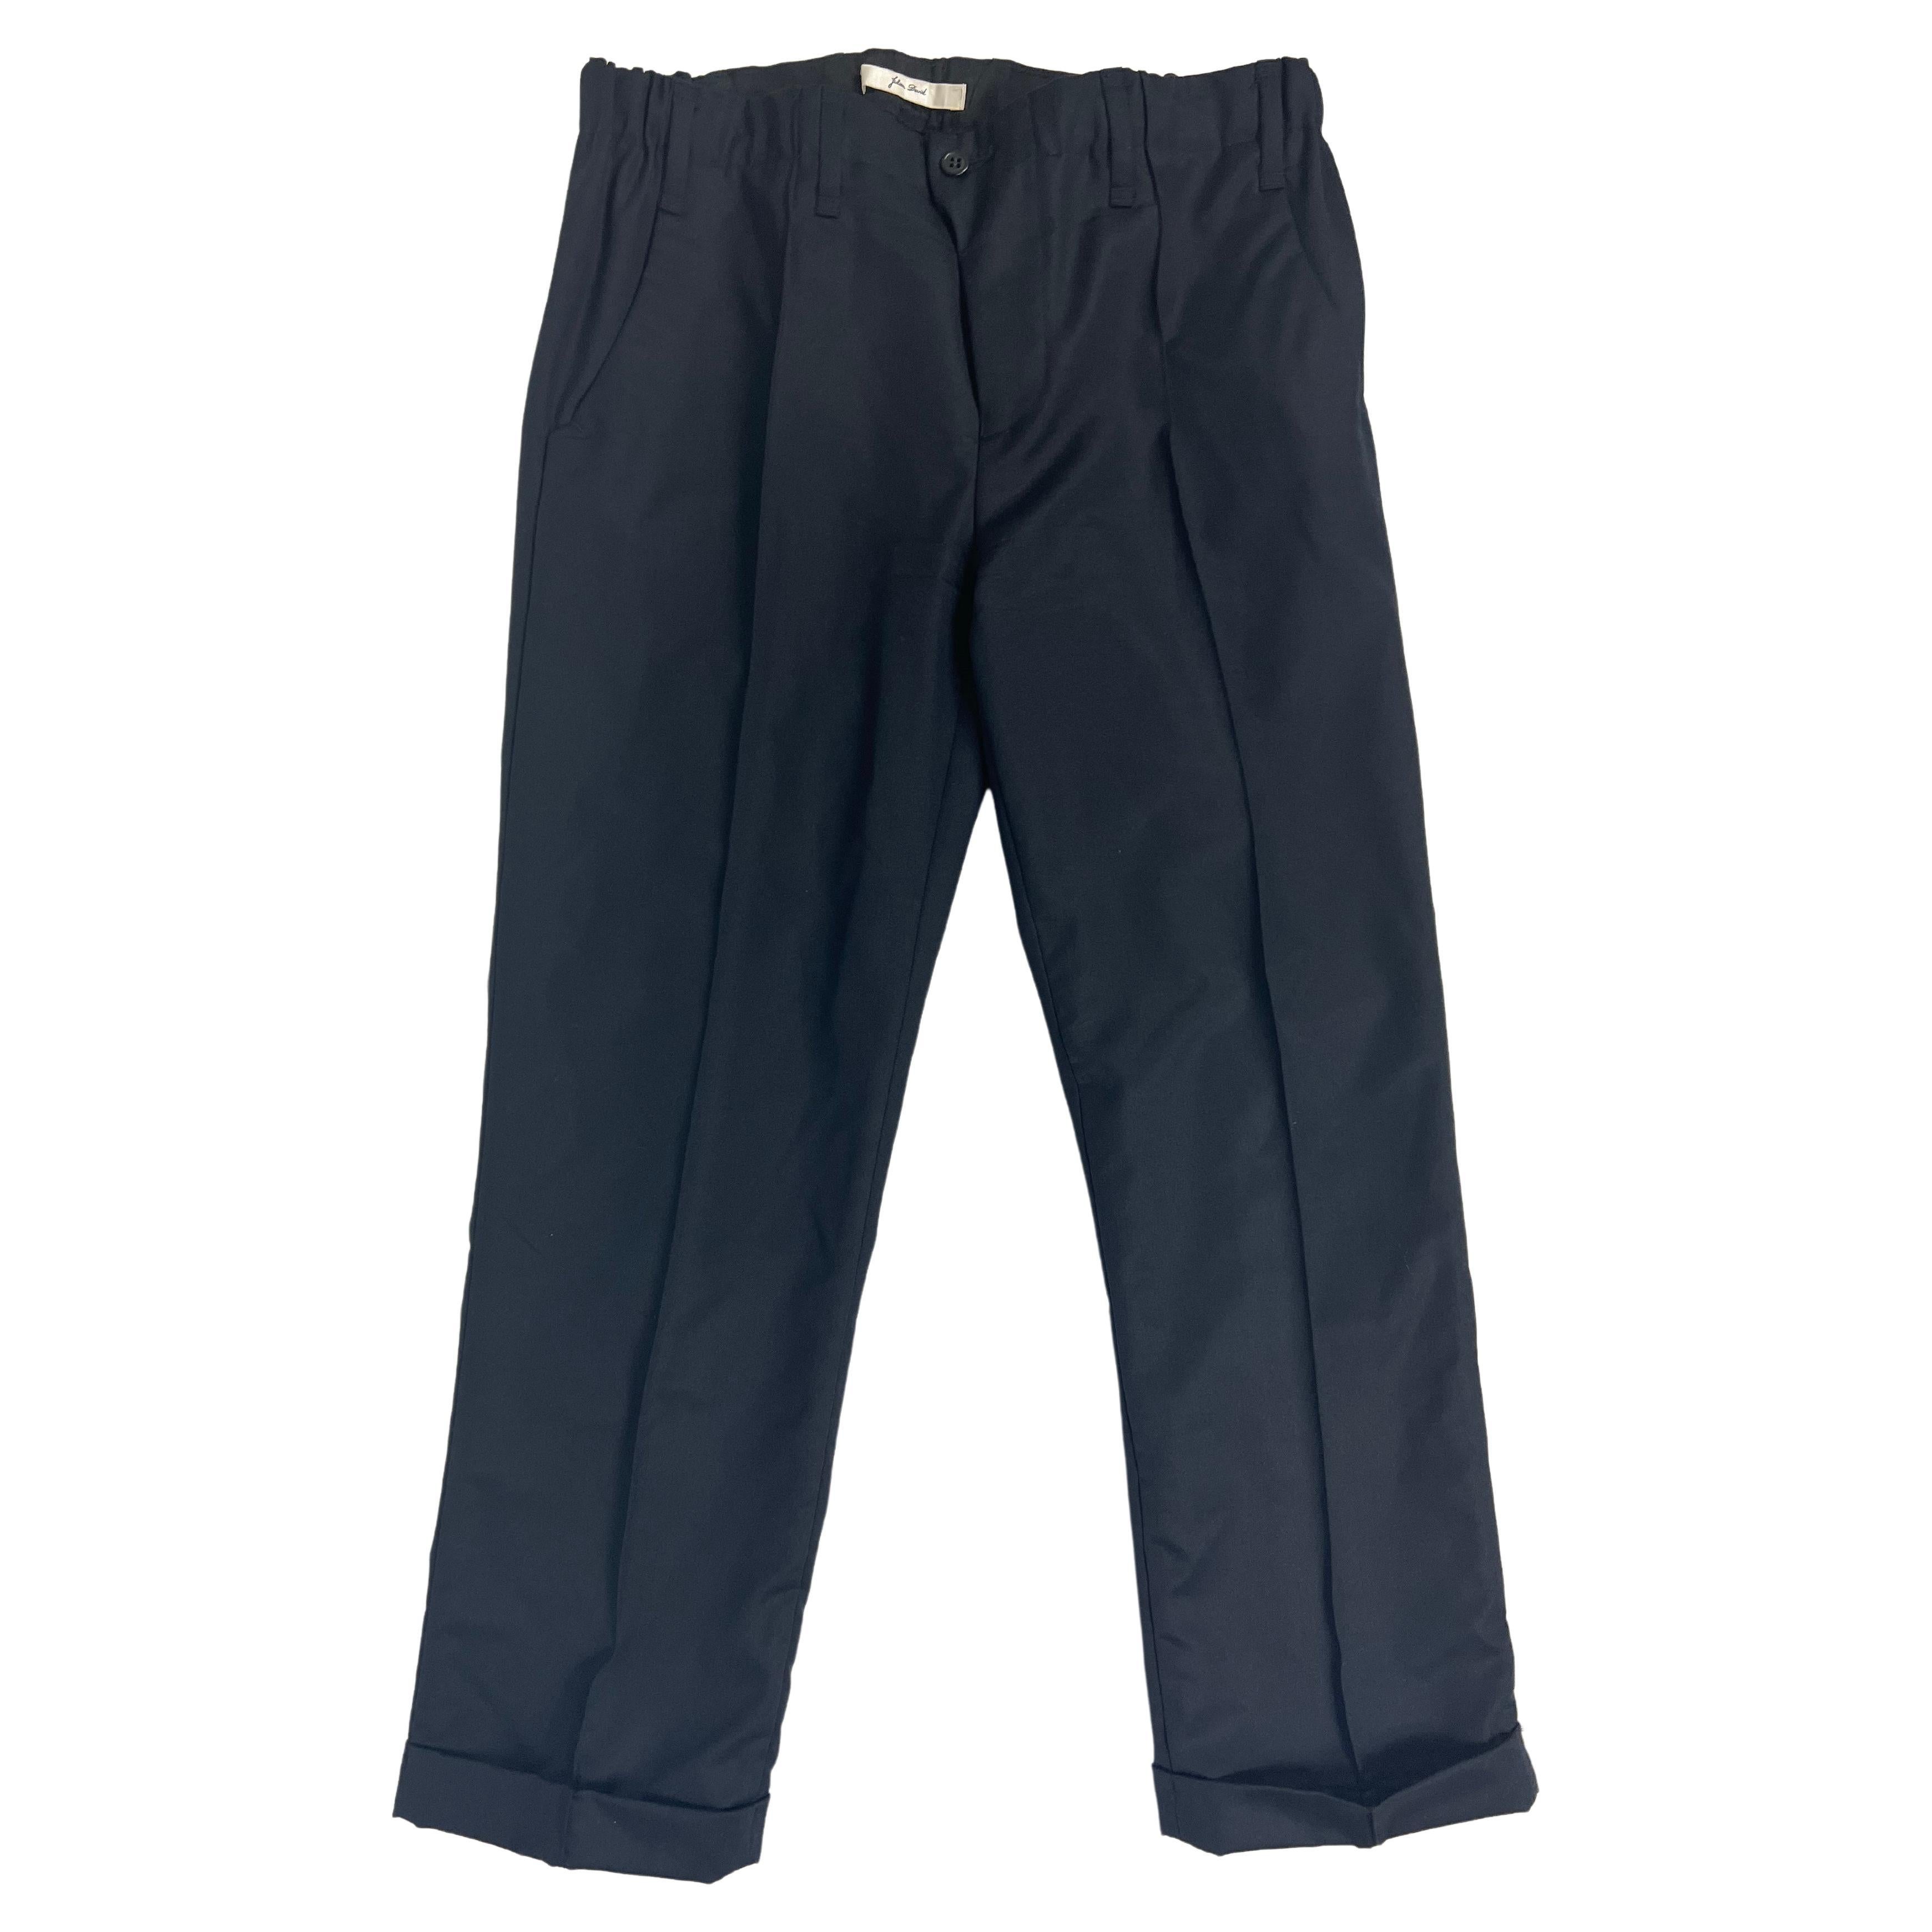 Julien David Navy Trousers Pants For Sale